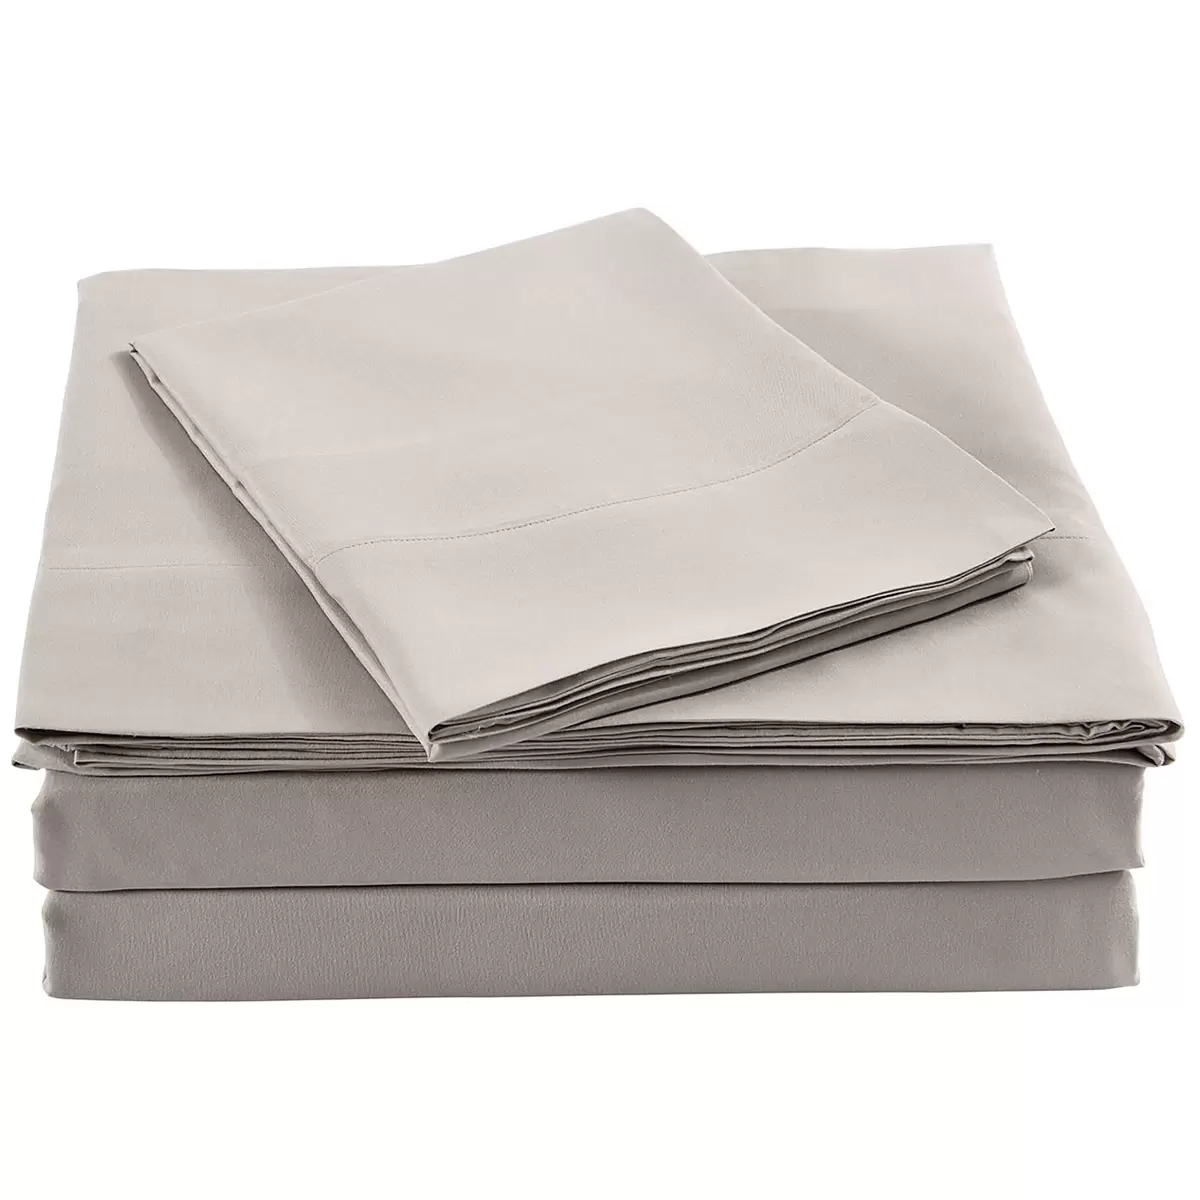 Bdirect Royal Comfort Blended Bamboo Sheet Set Queen - Grey